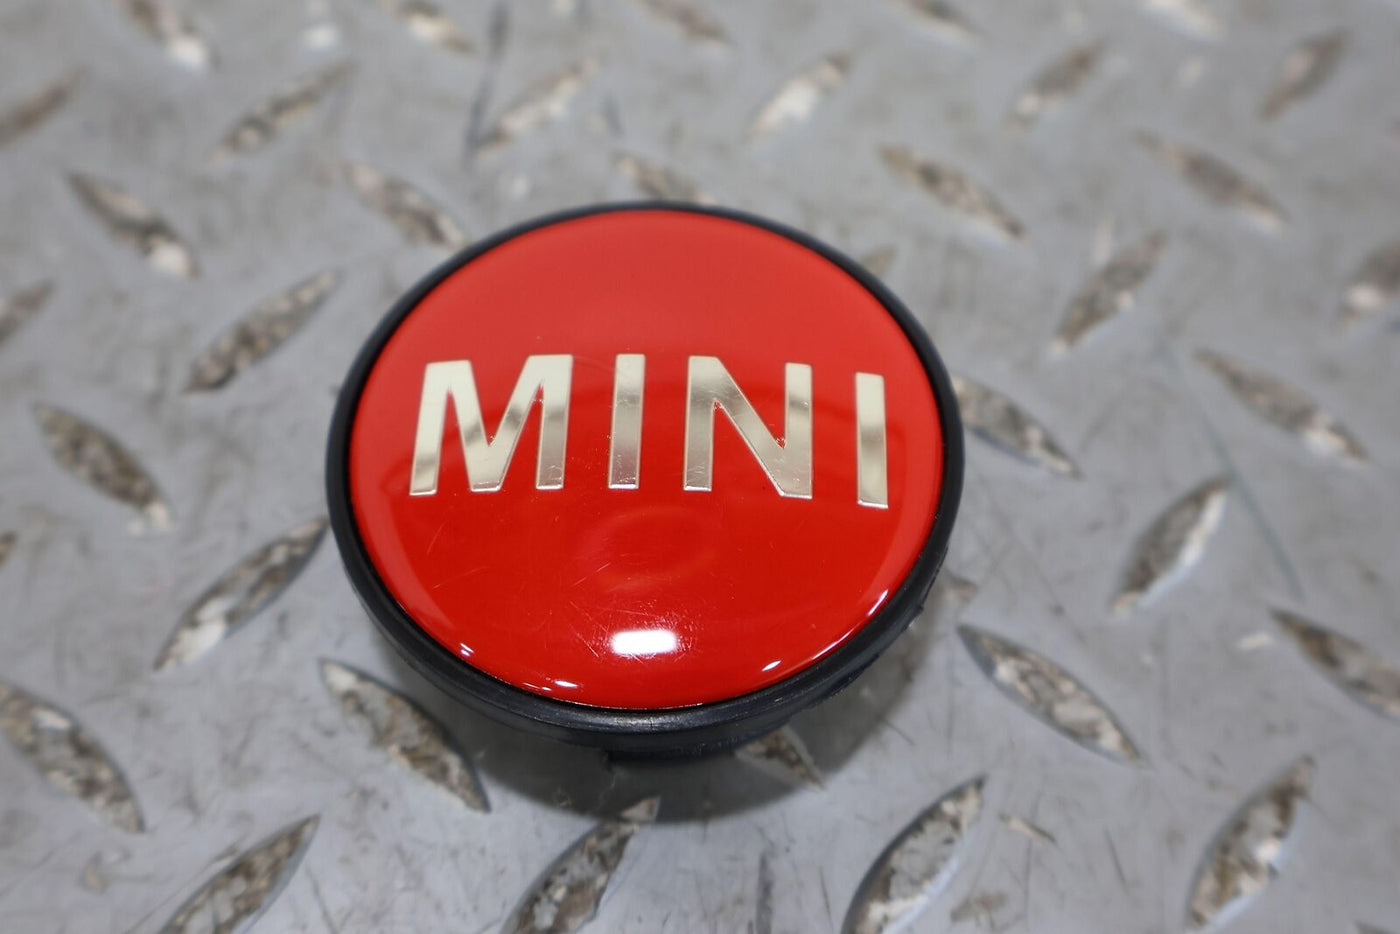 07-13 Mini Cooper S Set of 4 Wheel Center Caps (Chili Red) 83K Miles